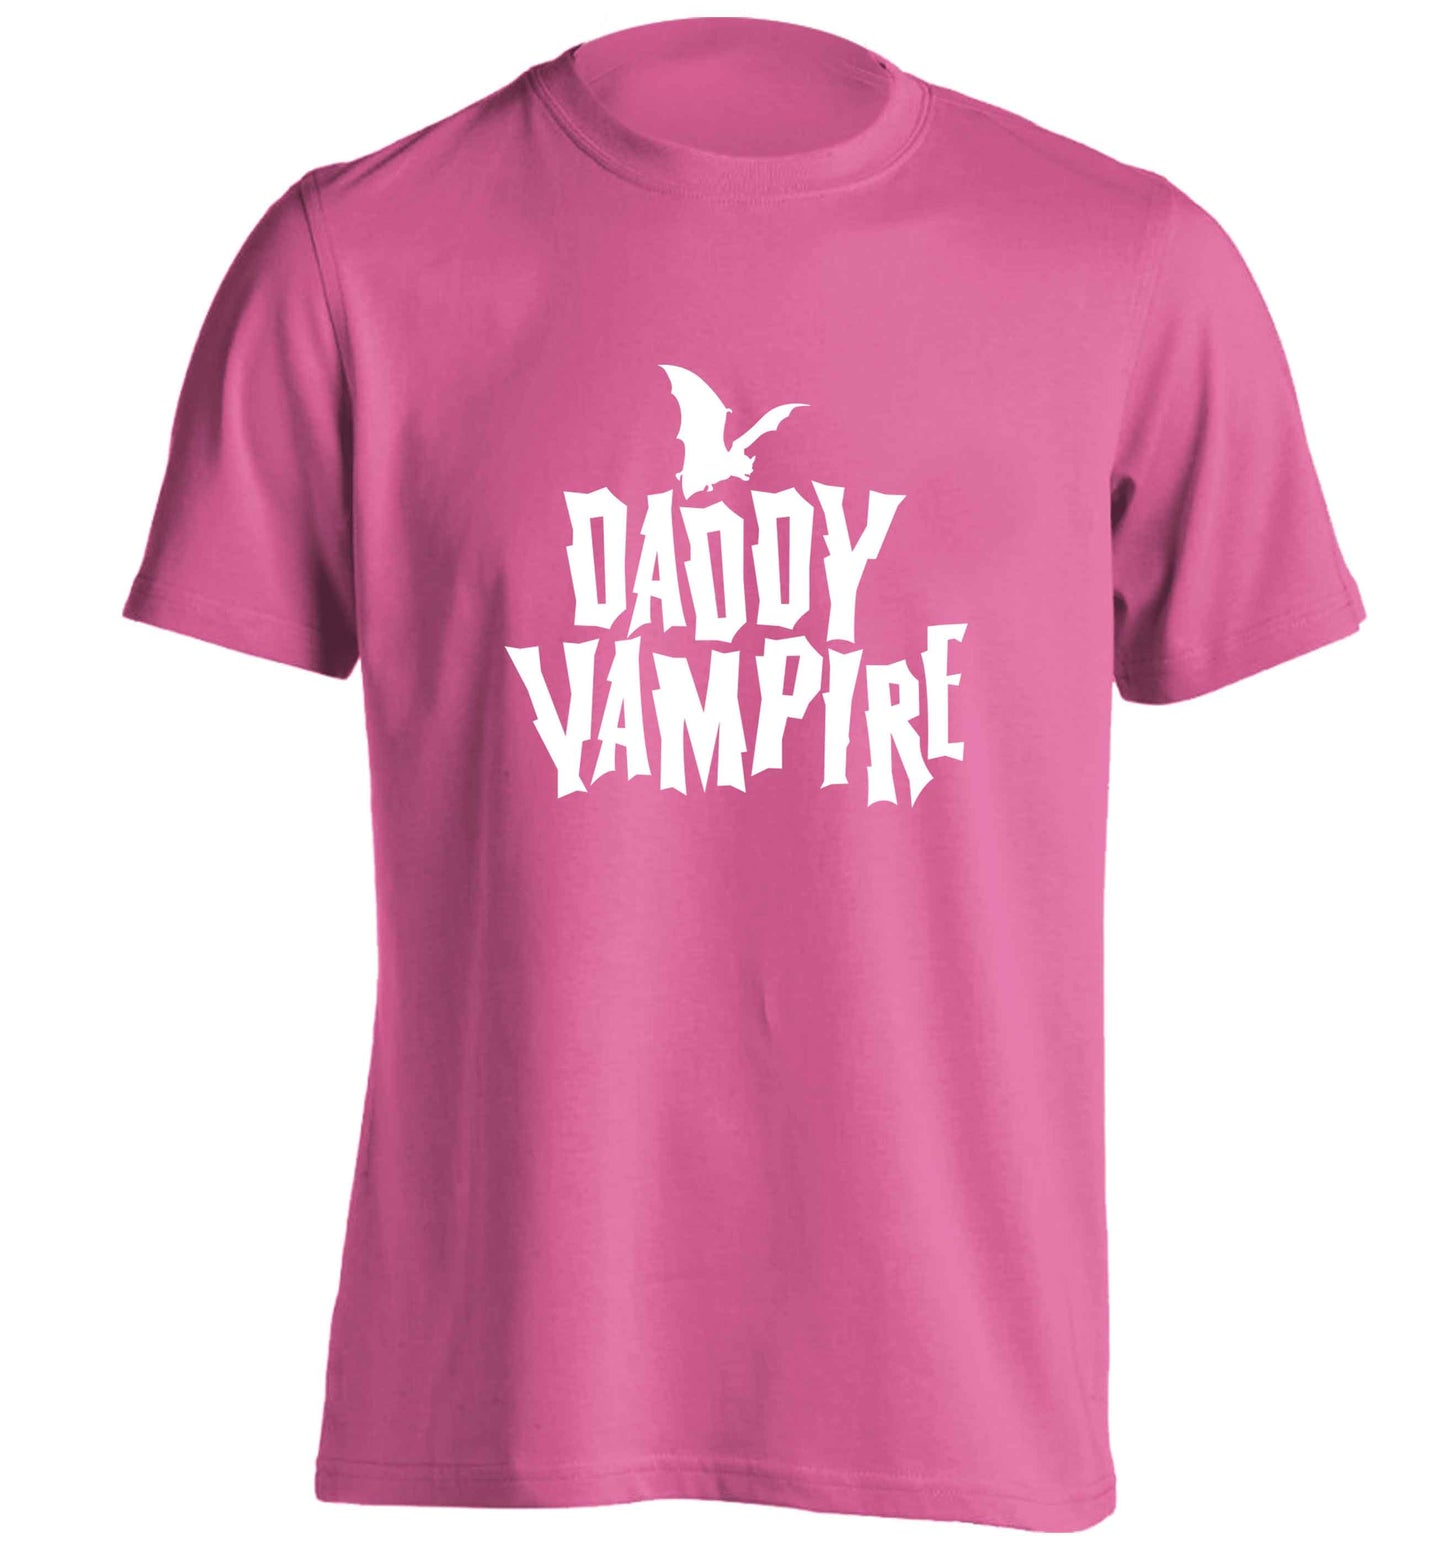 Daddy vampire adults unisex pink Tshirt 2XL